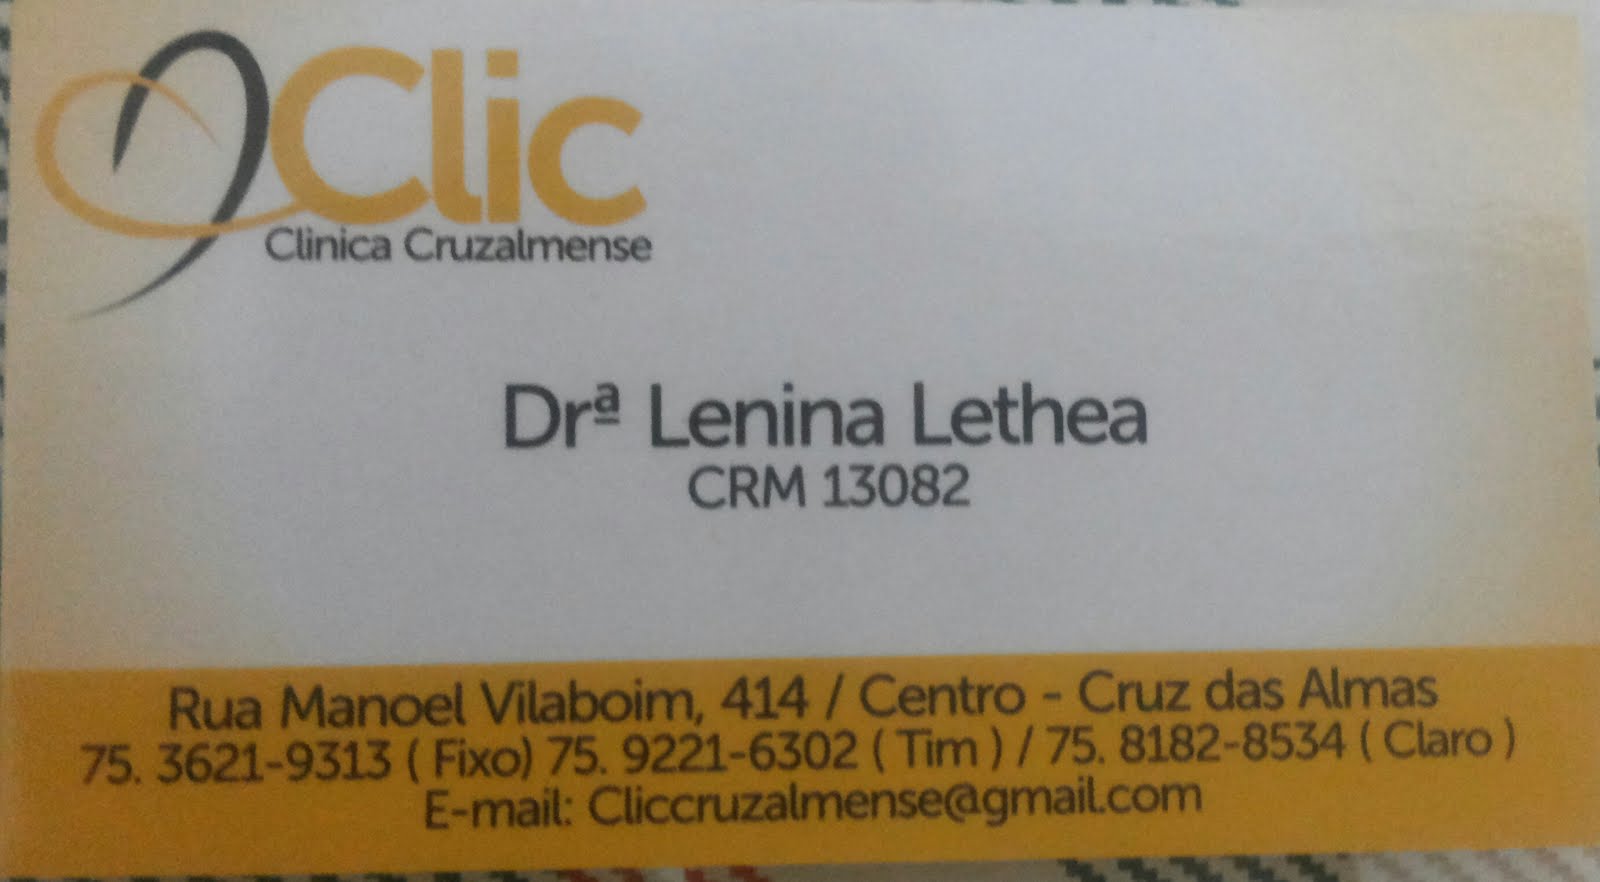 CLIC, a clínica de Dra. Lenina.